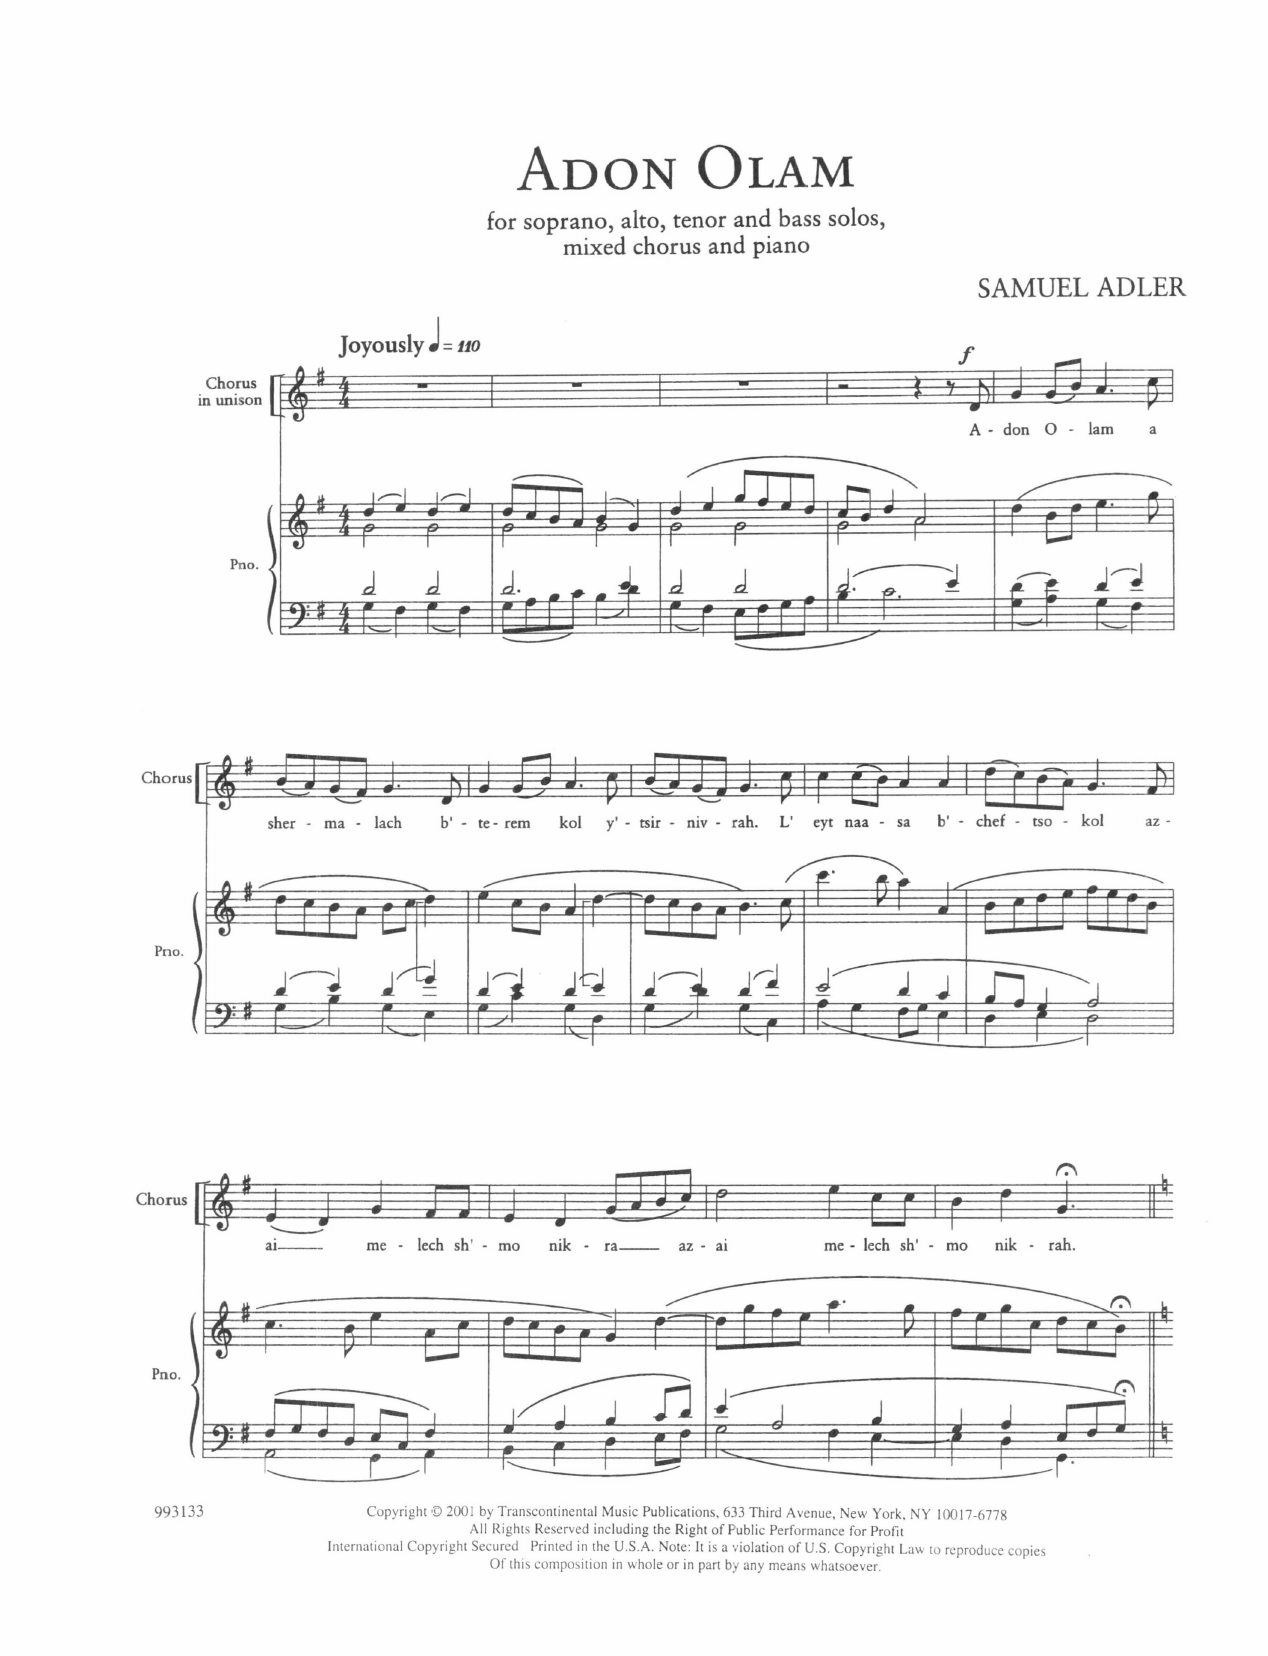 Samuel Adler Five Sephardic Choruses: Adon Olam Sheet Music Notes & Chords for SATB - Download or Print PDF